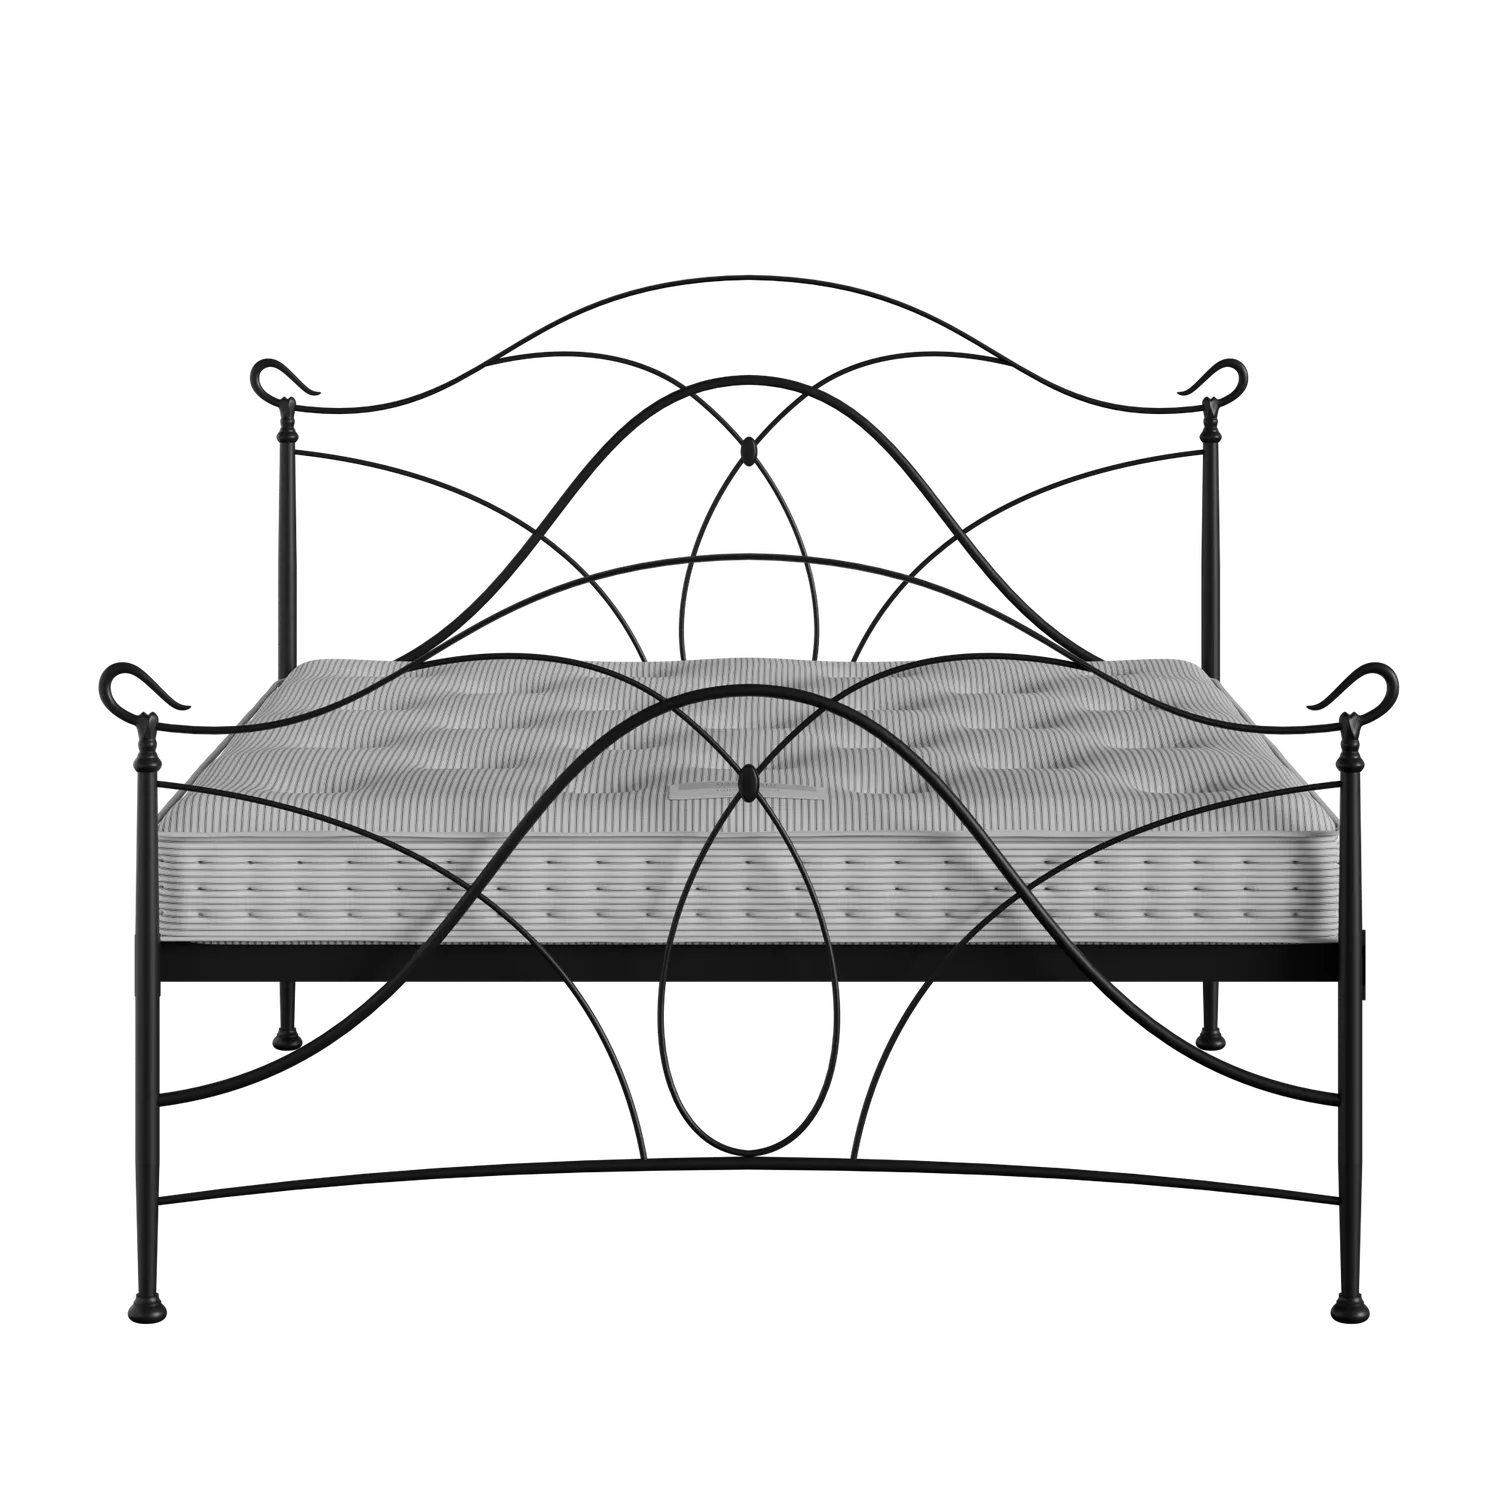 Ardo cama de metal en negro con colchón